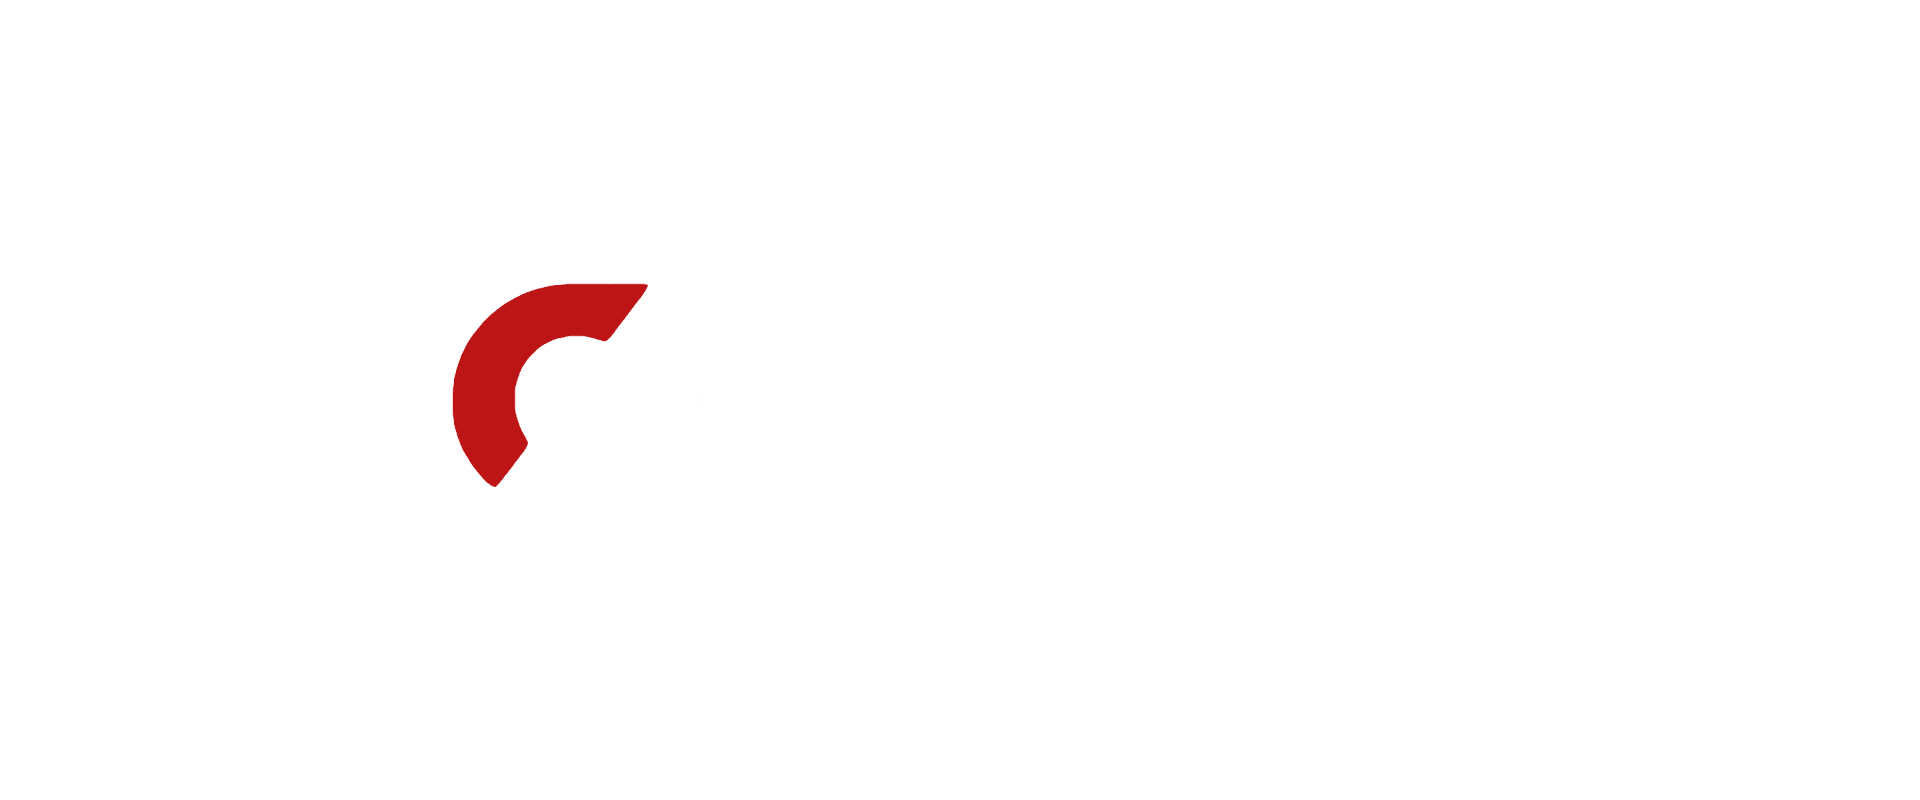 Scott Evans DJ logo